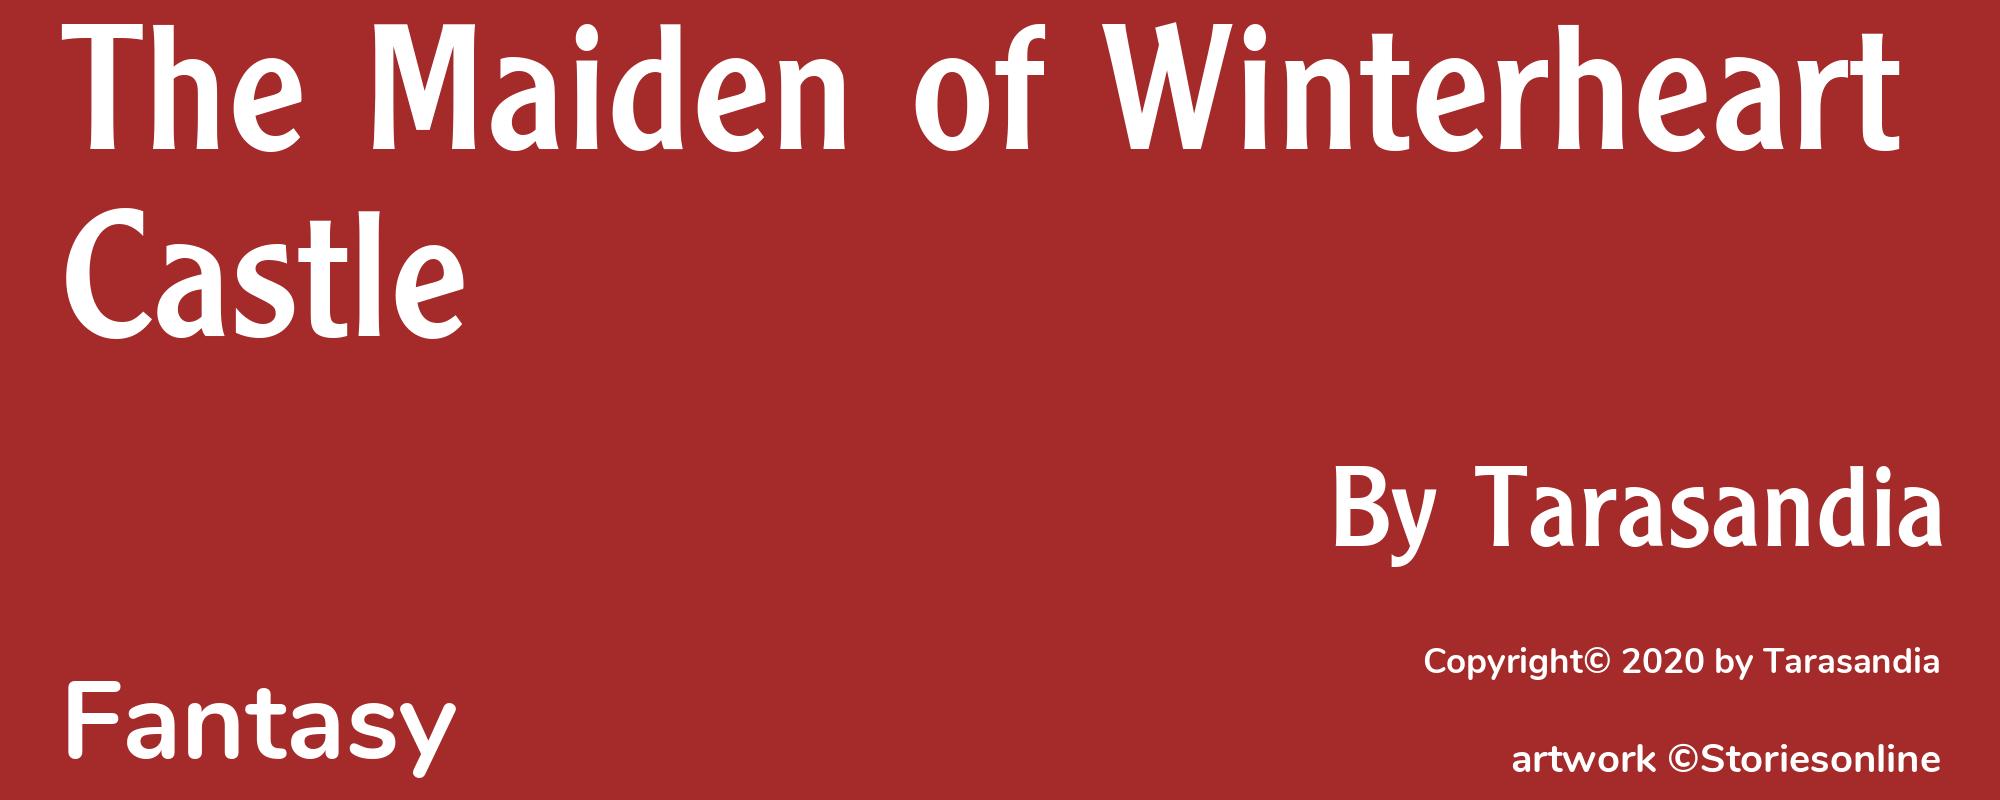 The Maiden of Winterheart Castle - Cover